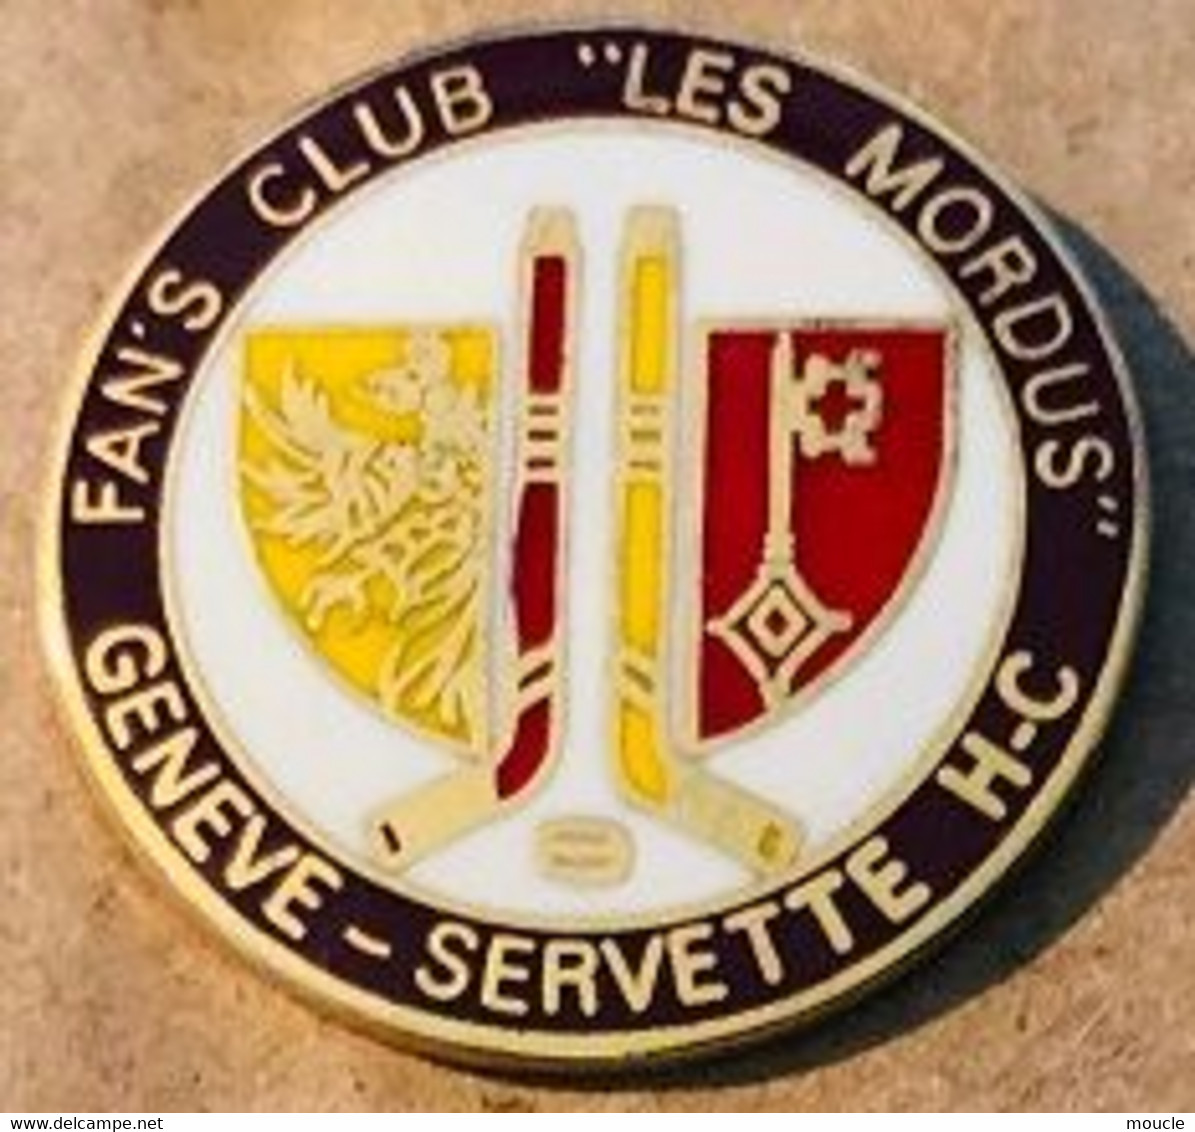 GENEVE SERVETTE HOCKEY CLUB - FAN'S CLUB "LES MORDUS"- ICE - AIGLE - GENEVA - SUISSE - SCHWEIZ - SWITZERLAND -     (28) - Wintersport